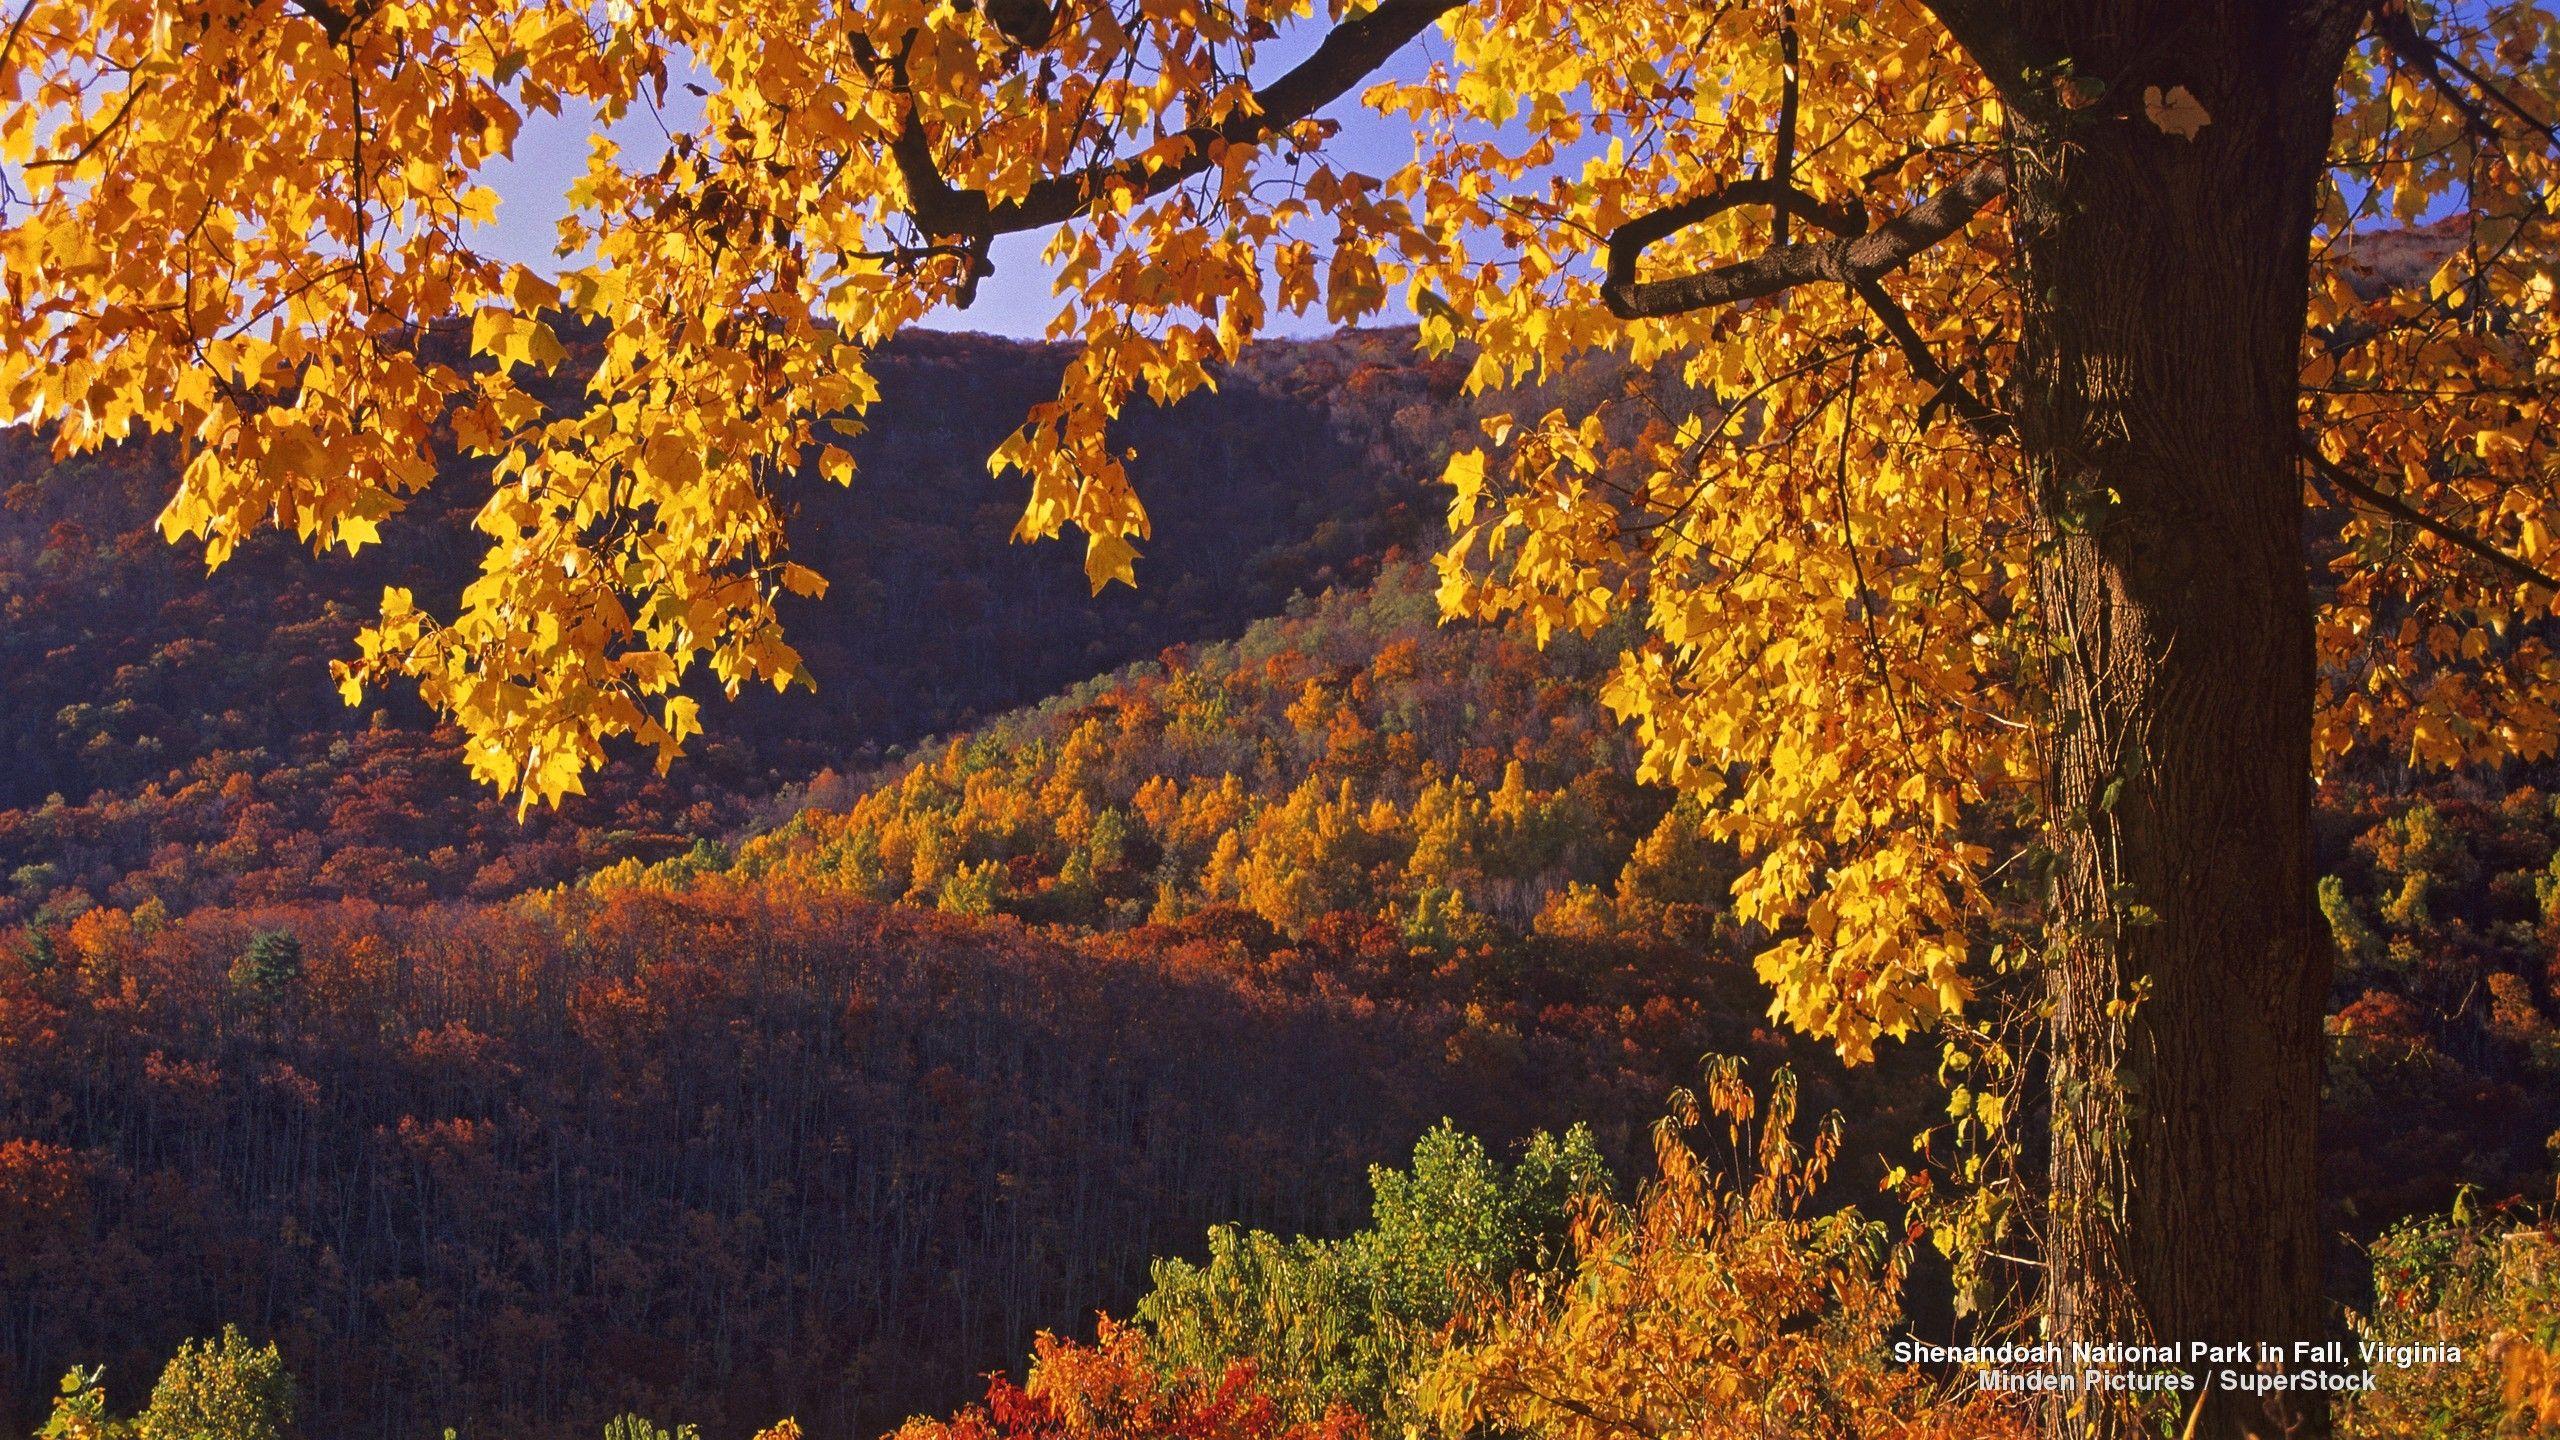 Shenandoah National Park in Virginia Full HD Wallpaper